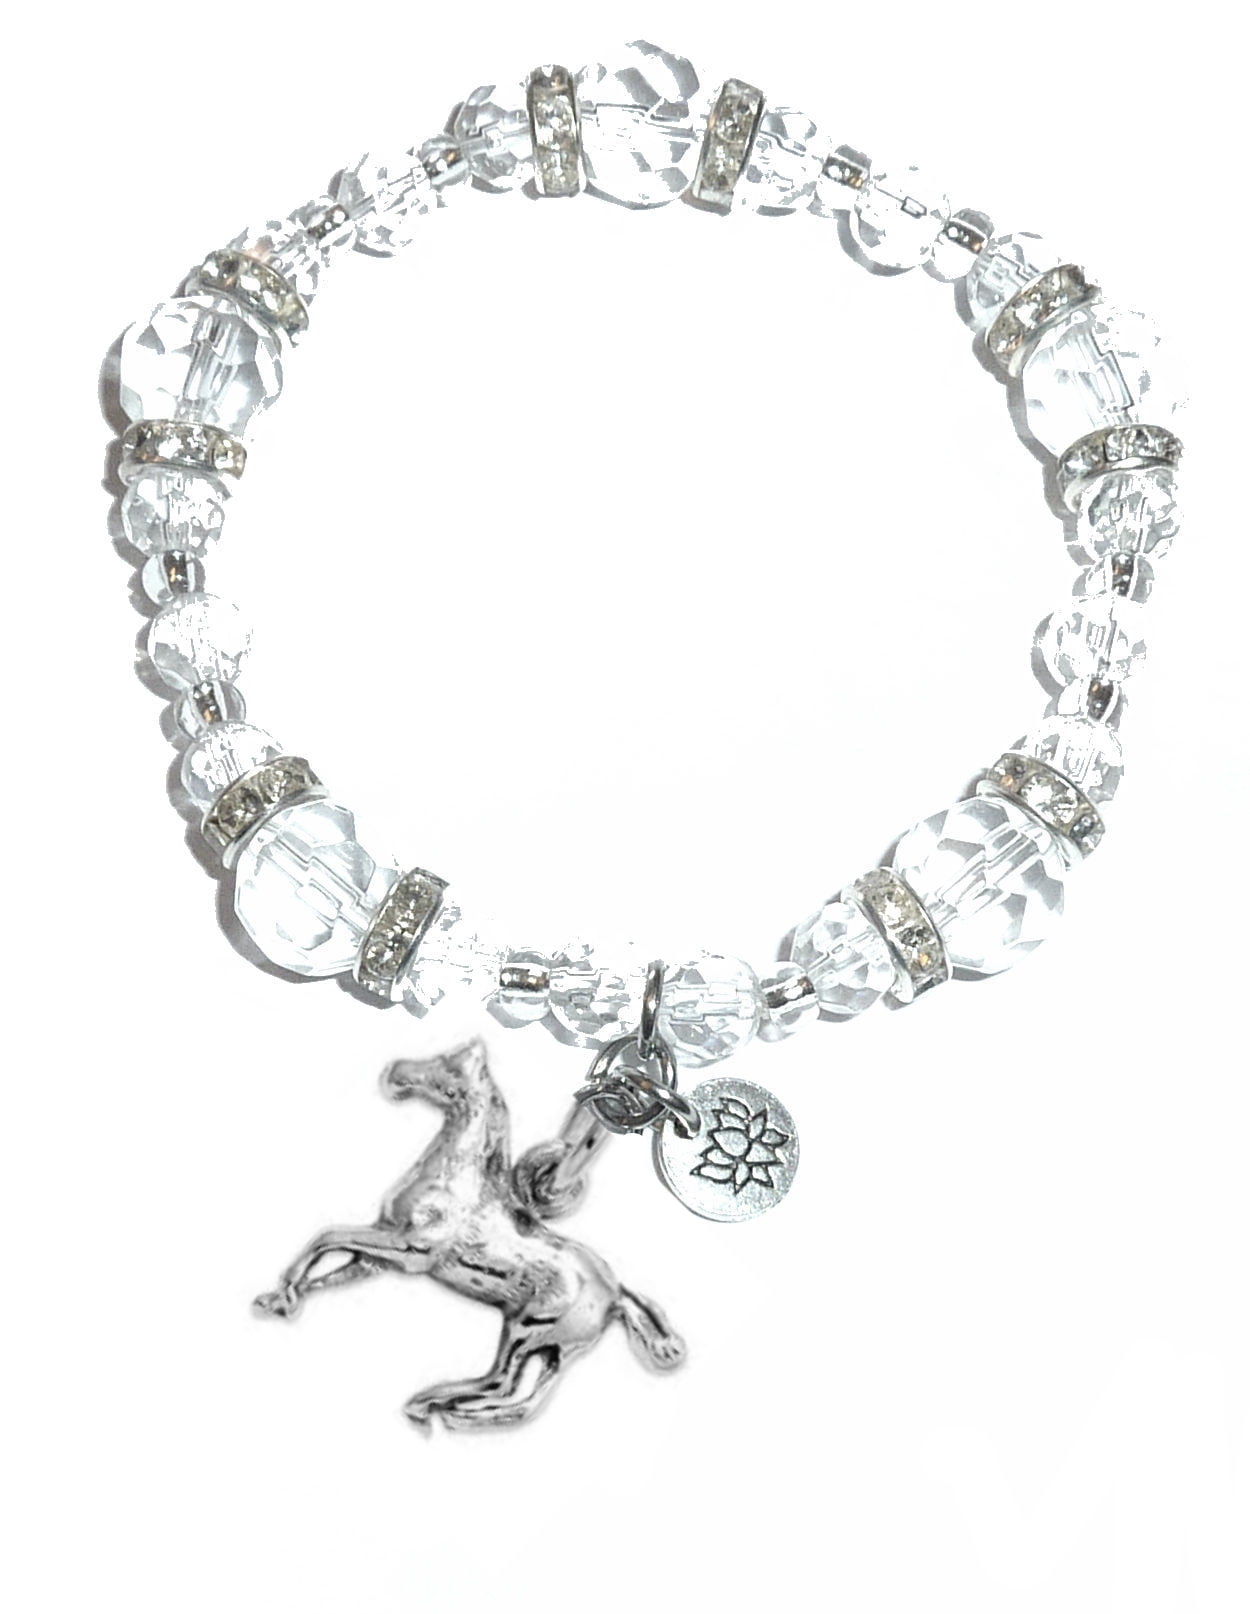 BALI LEGACY 925 Sterling Silver Bracelet Women Gifts For Boho Jewelry Size 6.75" 